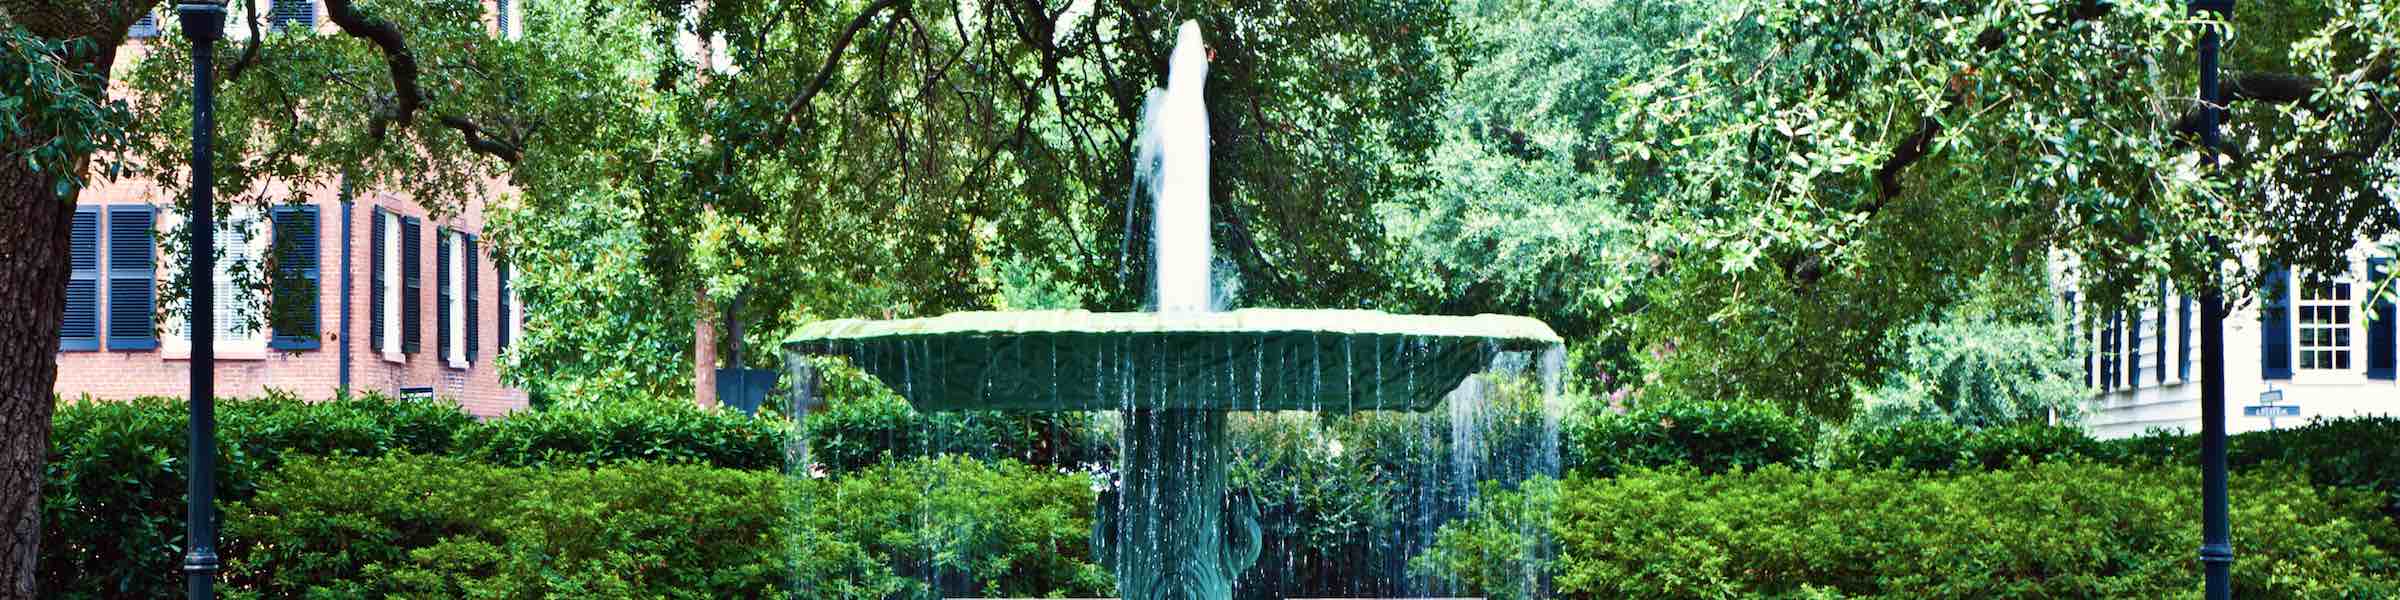 The Wormsloe Fountain in Columbia Square, Savannah, GA.